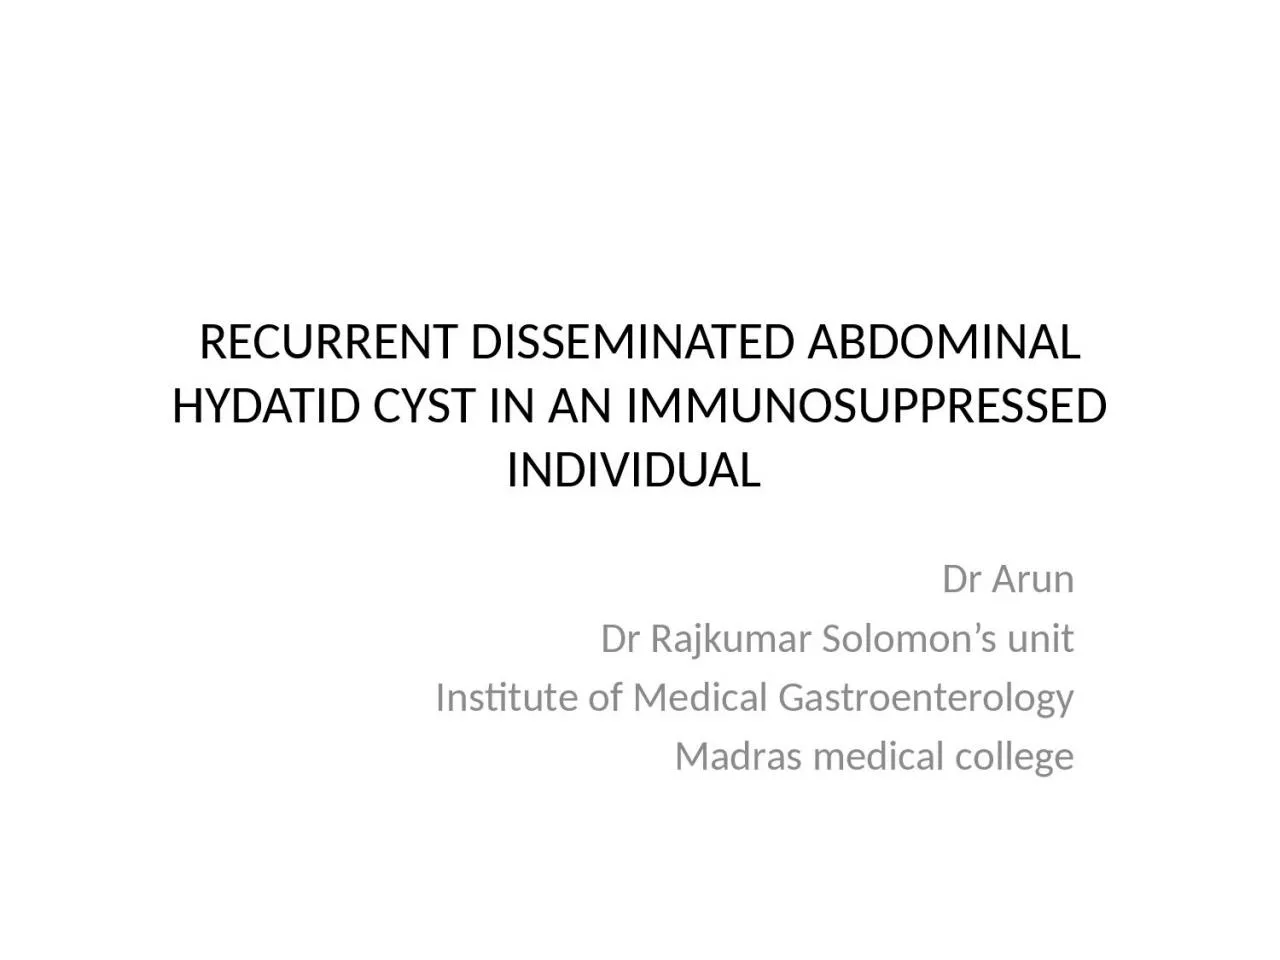 RECURRENT DISSEMINATED ABDOMINAL HYDATID CYST IN AN IMMUNOSUPPRESSED INDIVIDUAL